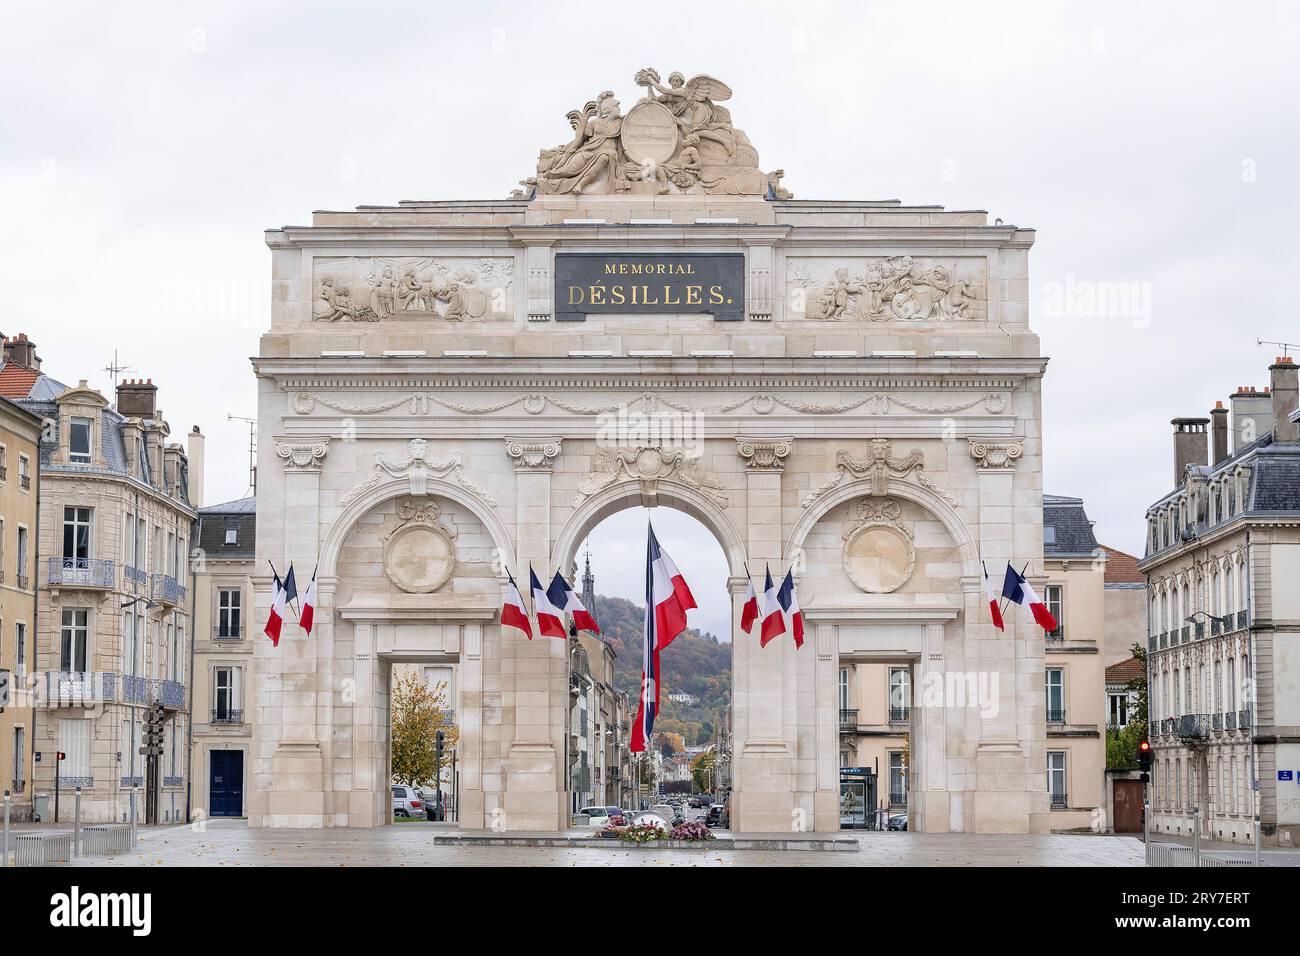 War memorial gate Désilles with tricolor flags Stock Photo